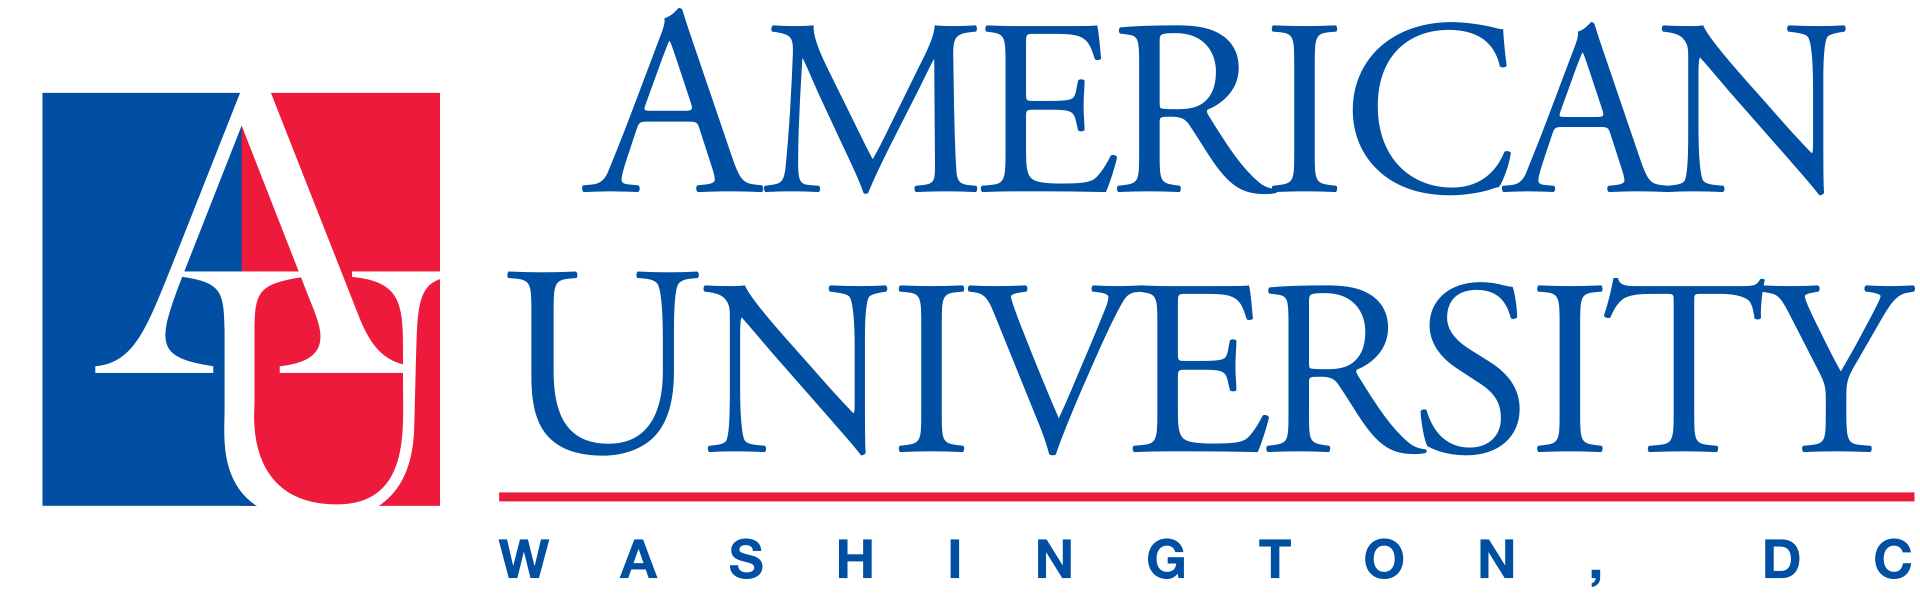 American University logo, By American University - https://www.american.edu, Public Domain, https://commons.wikimedia.org/w/index.php?curid=54500563